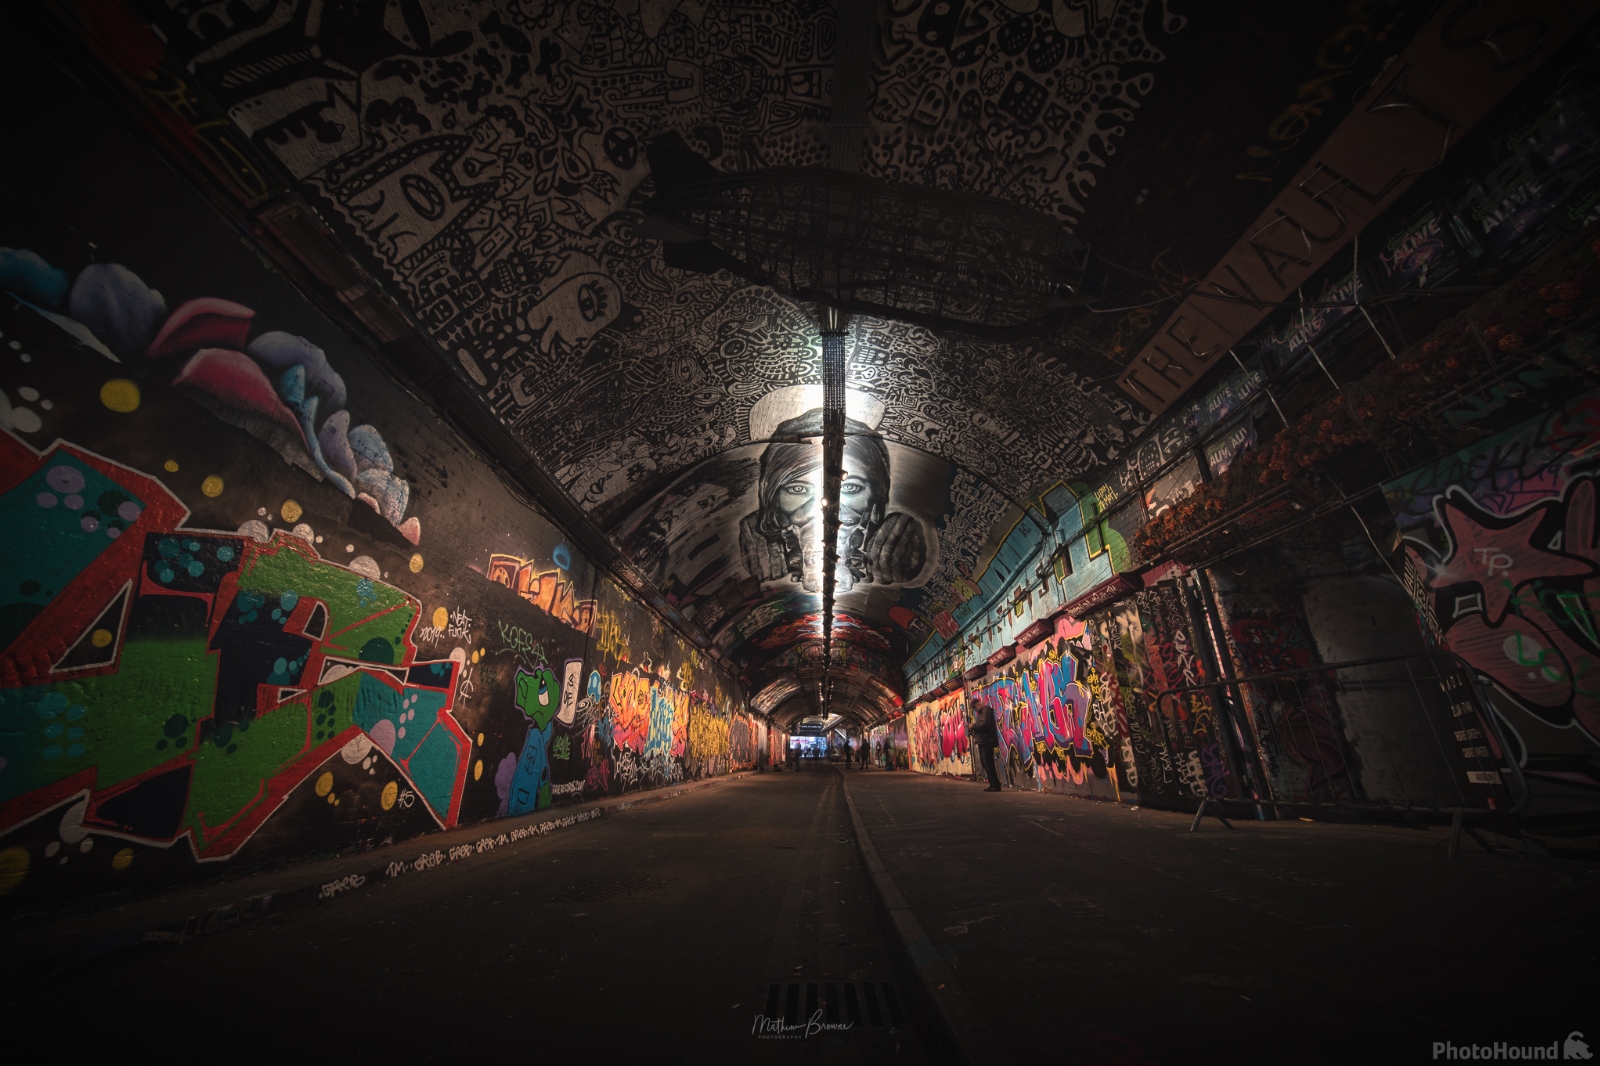 Image of Leake Street Graffiti Tunnel by Mathew Browne